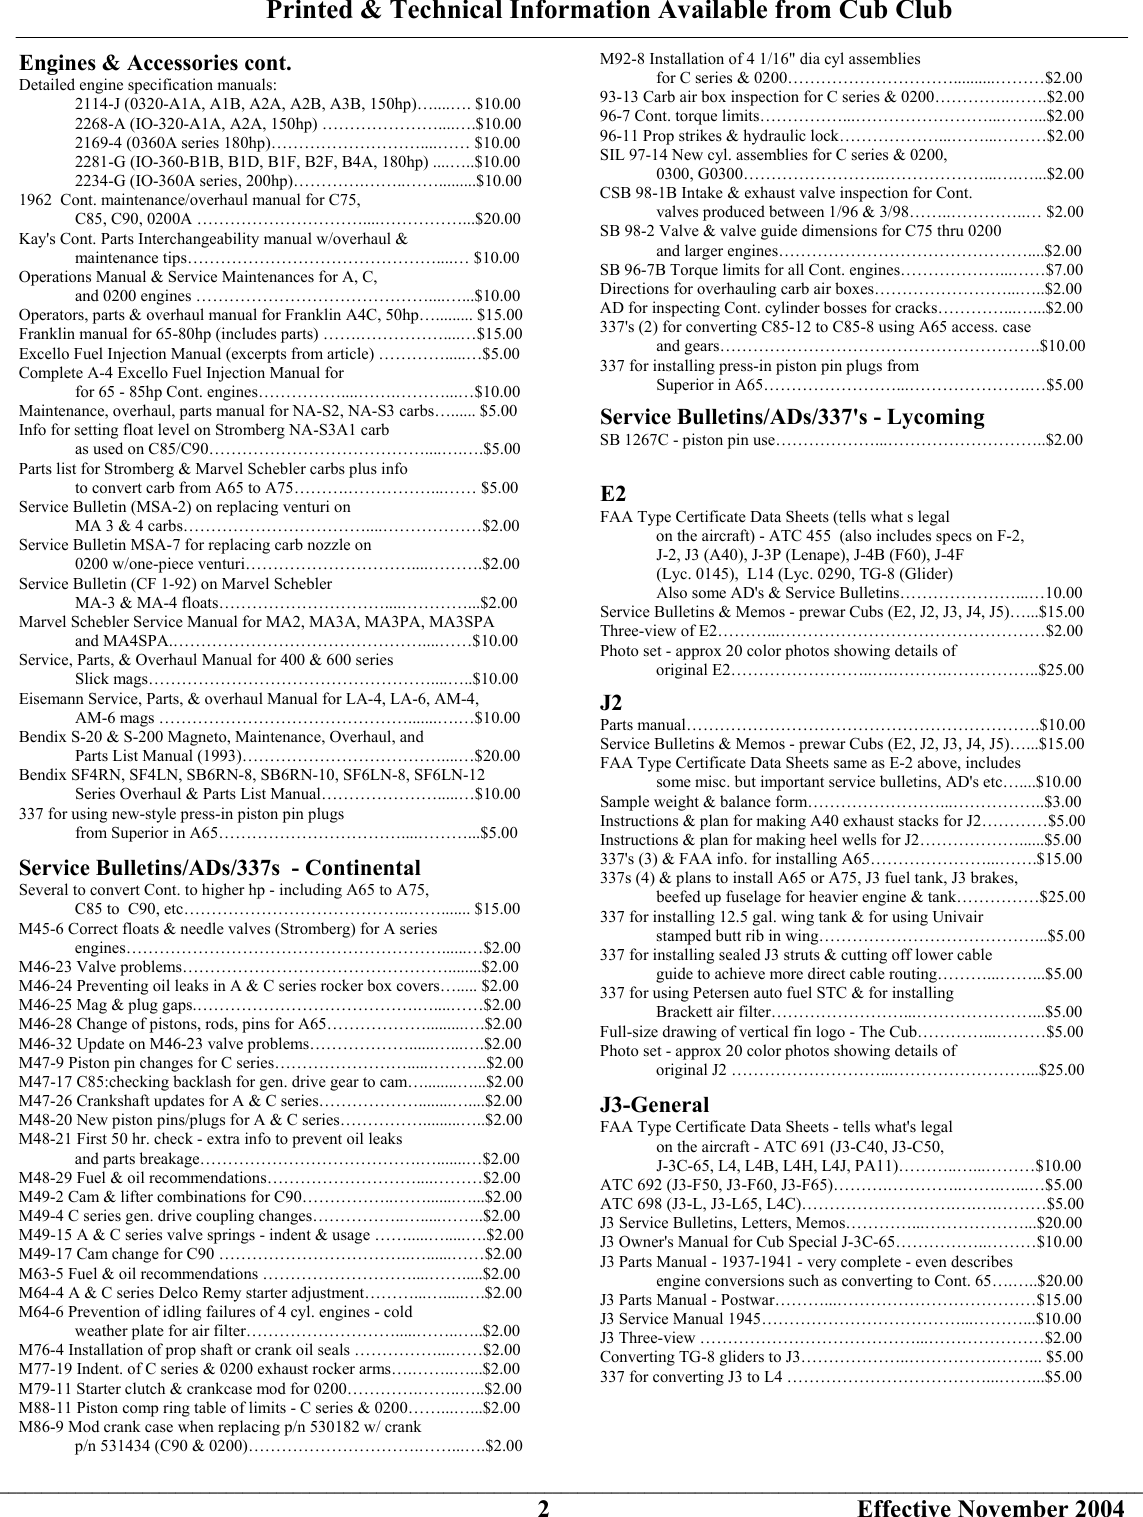 Page 2 of 6 - LWNT_470 PA18_Printed Techlist PA18 Printed